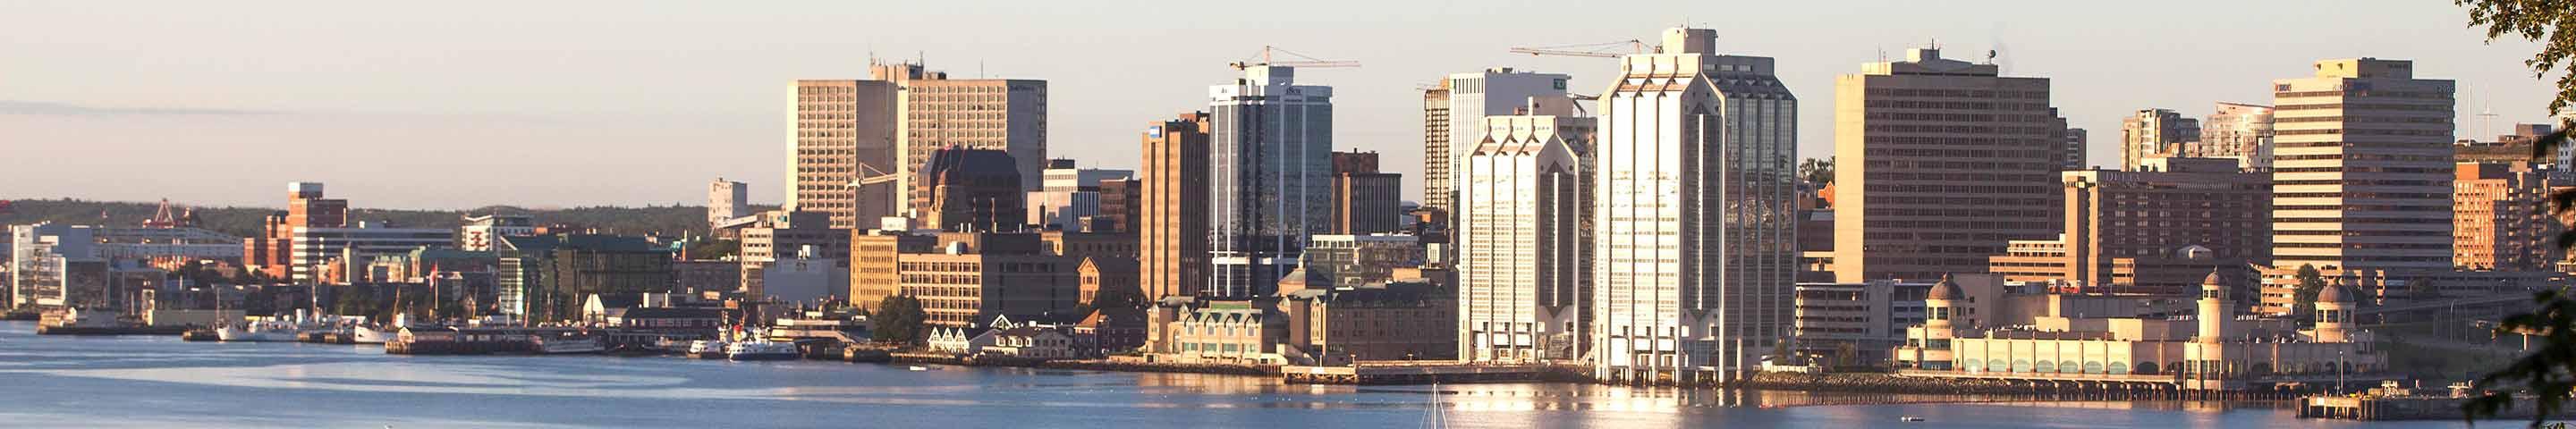 The city skyline of Halifax, Nova Scotia